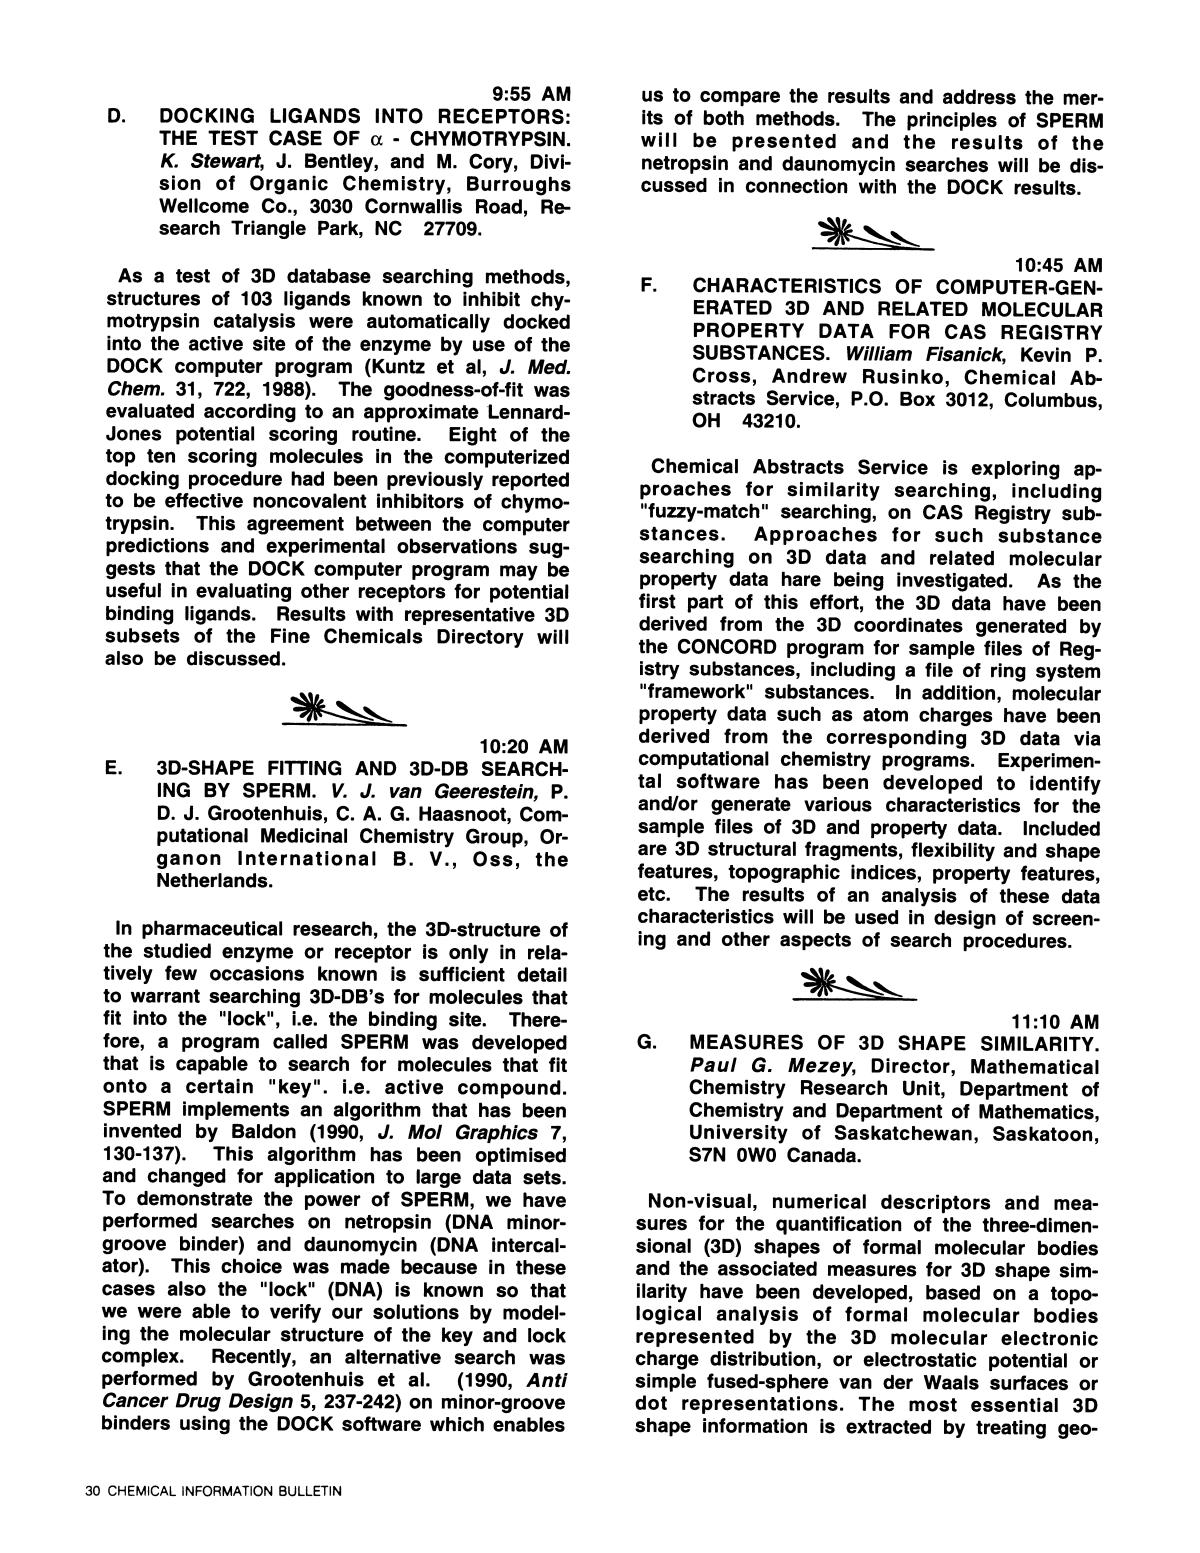 Chemical Information Bulletin, Volume 43, Number 2, Summer 1991
                                                
                                                    30
                                                